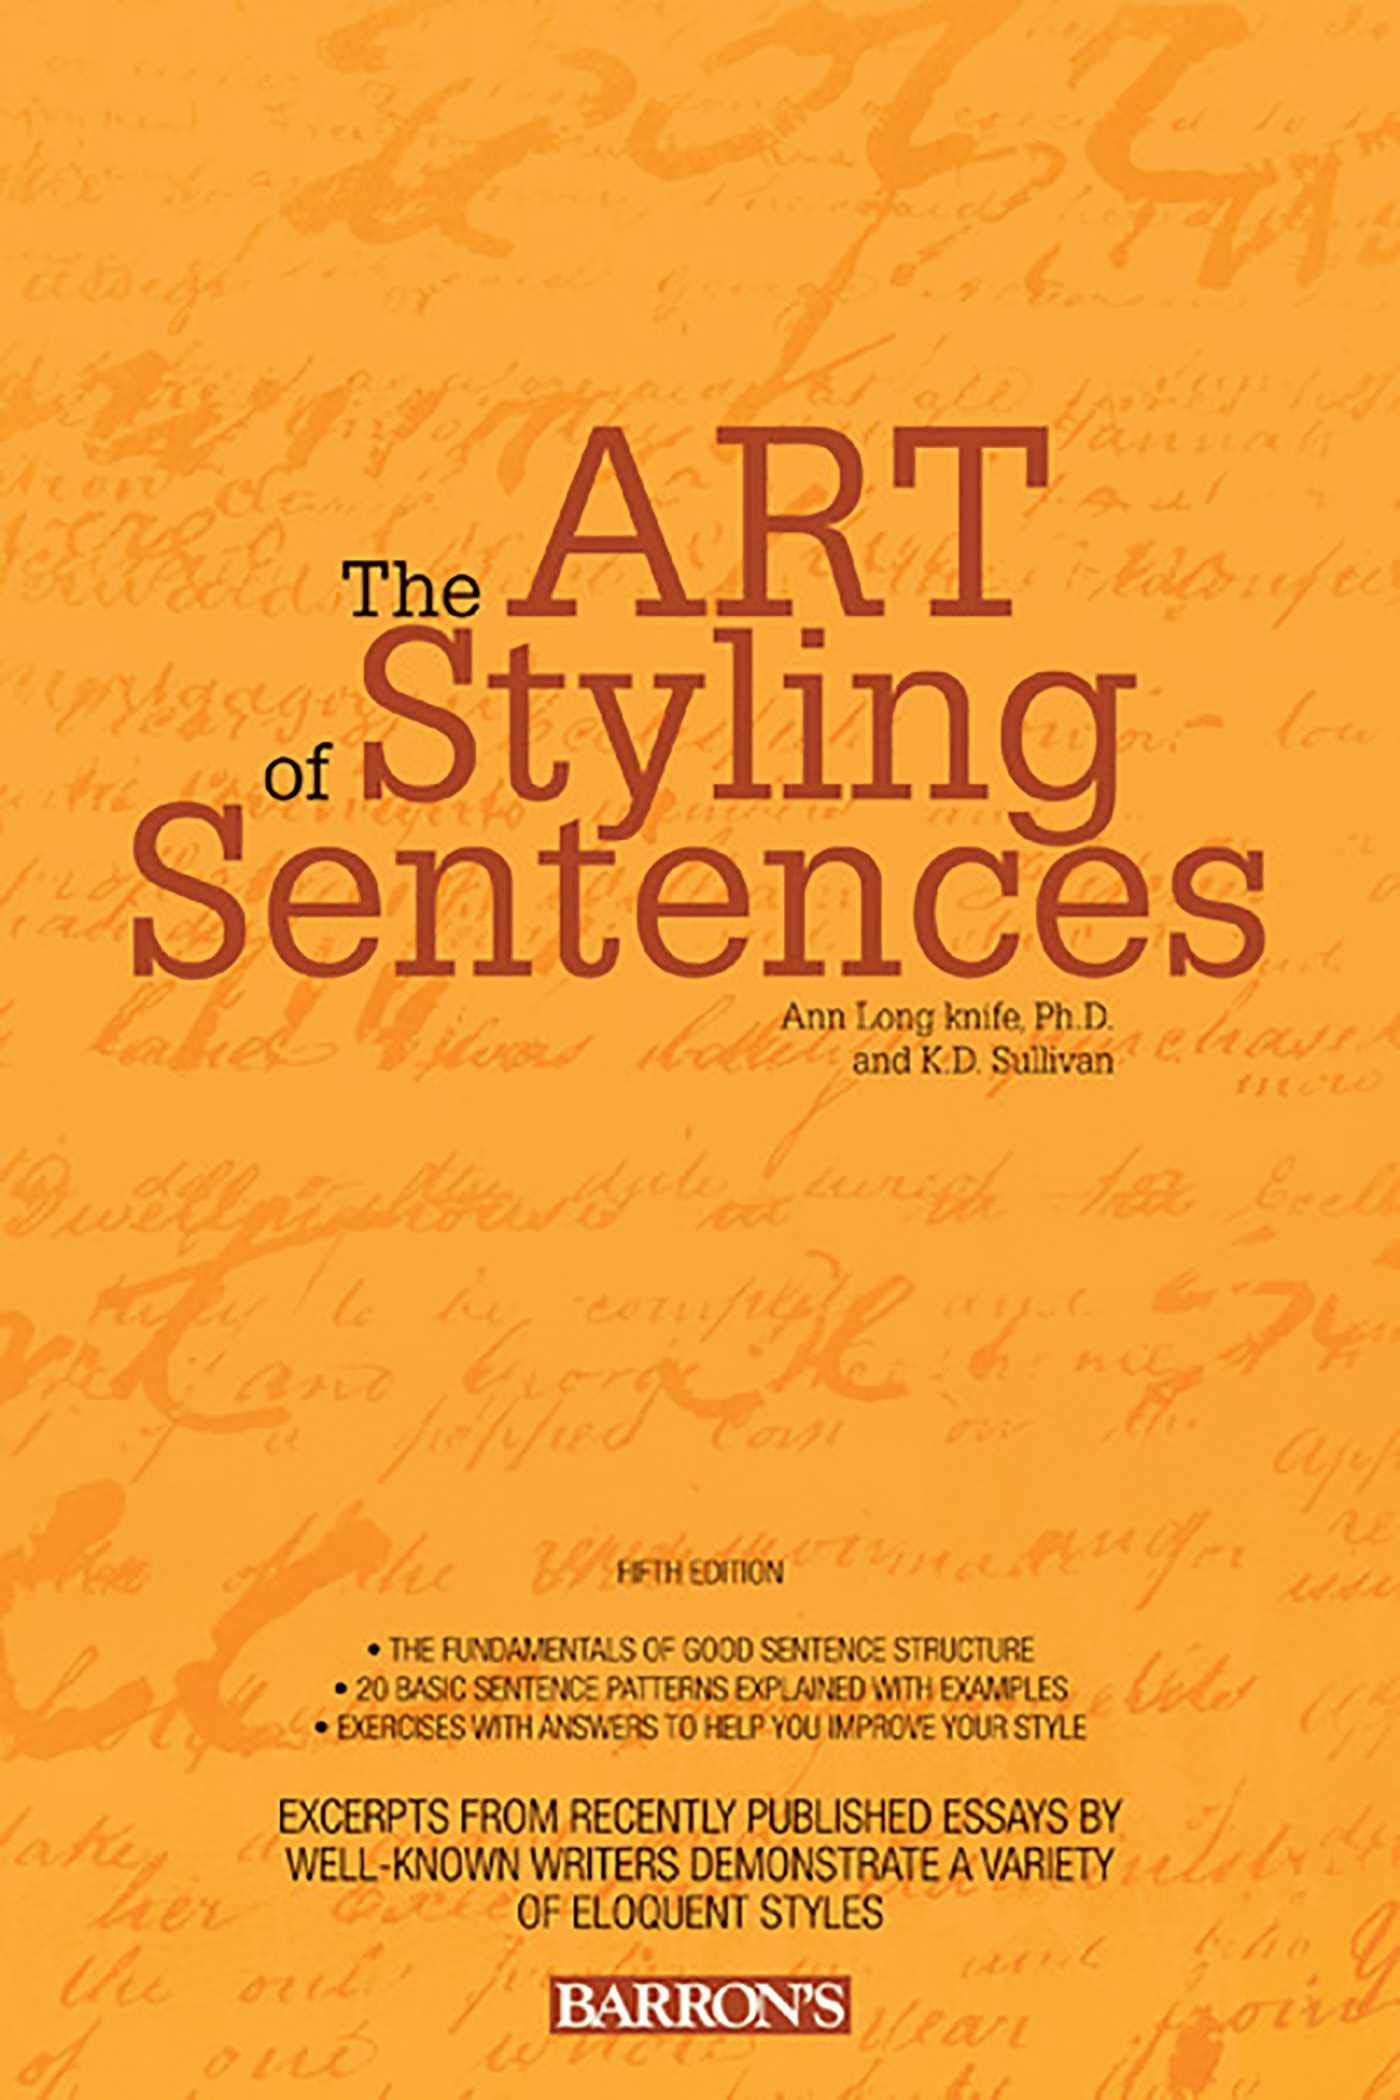 Art of Styling Sentences (Longknife - paperback) >Out of Print<